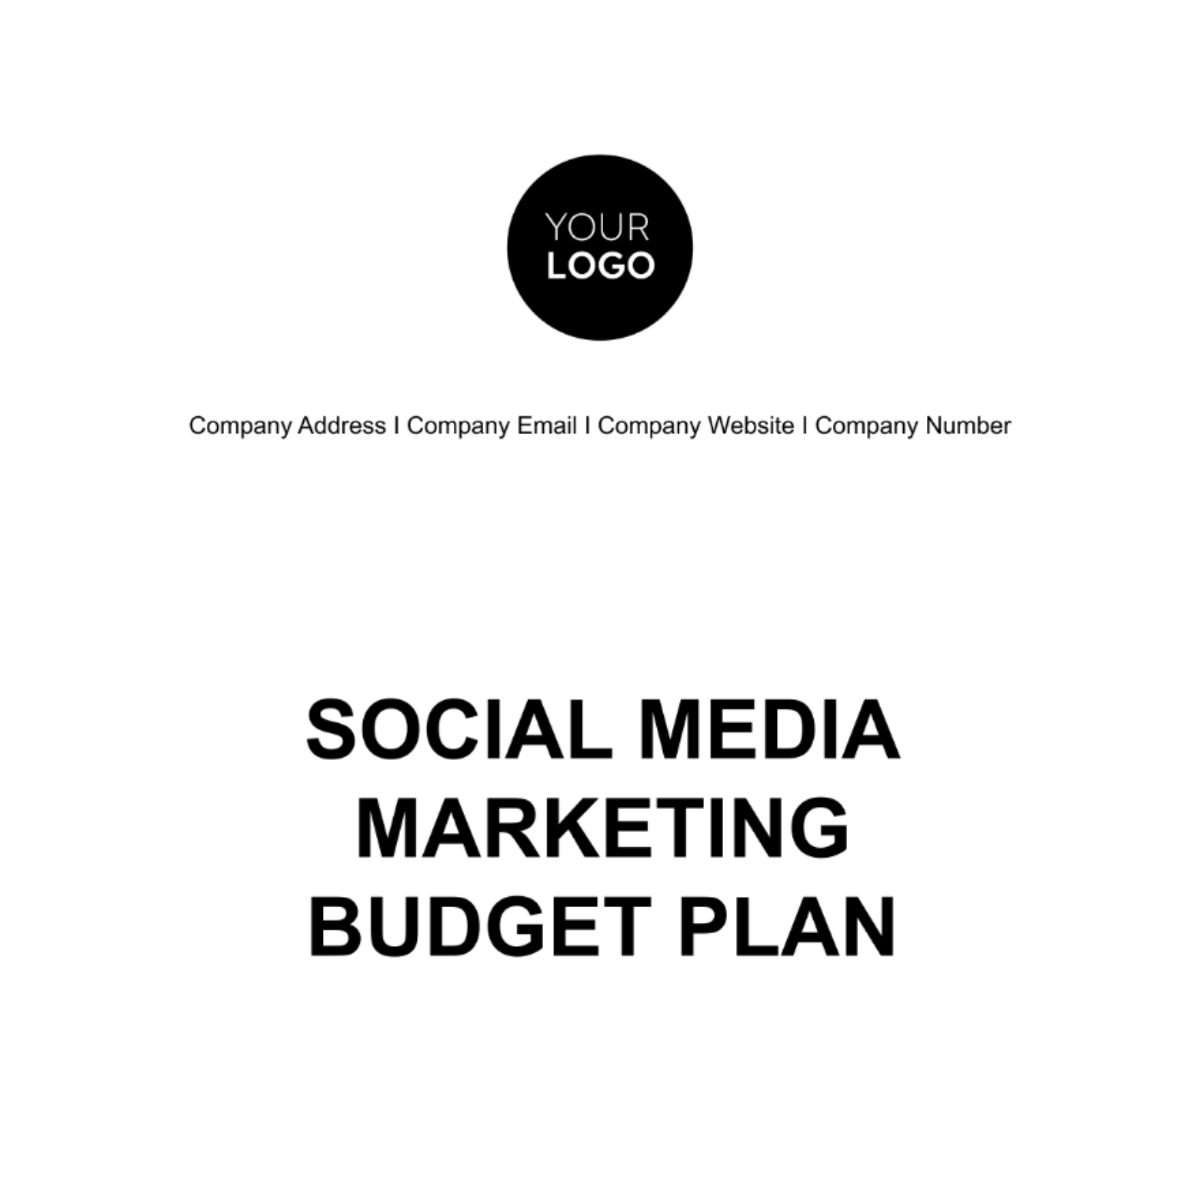 Social Media Marketing Budget Plan Template